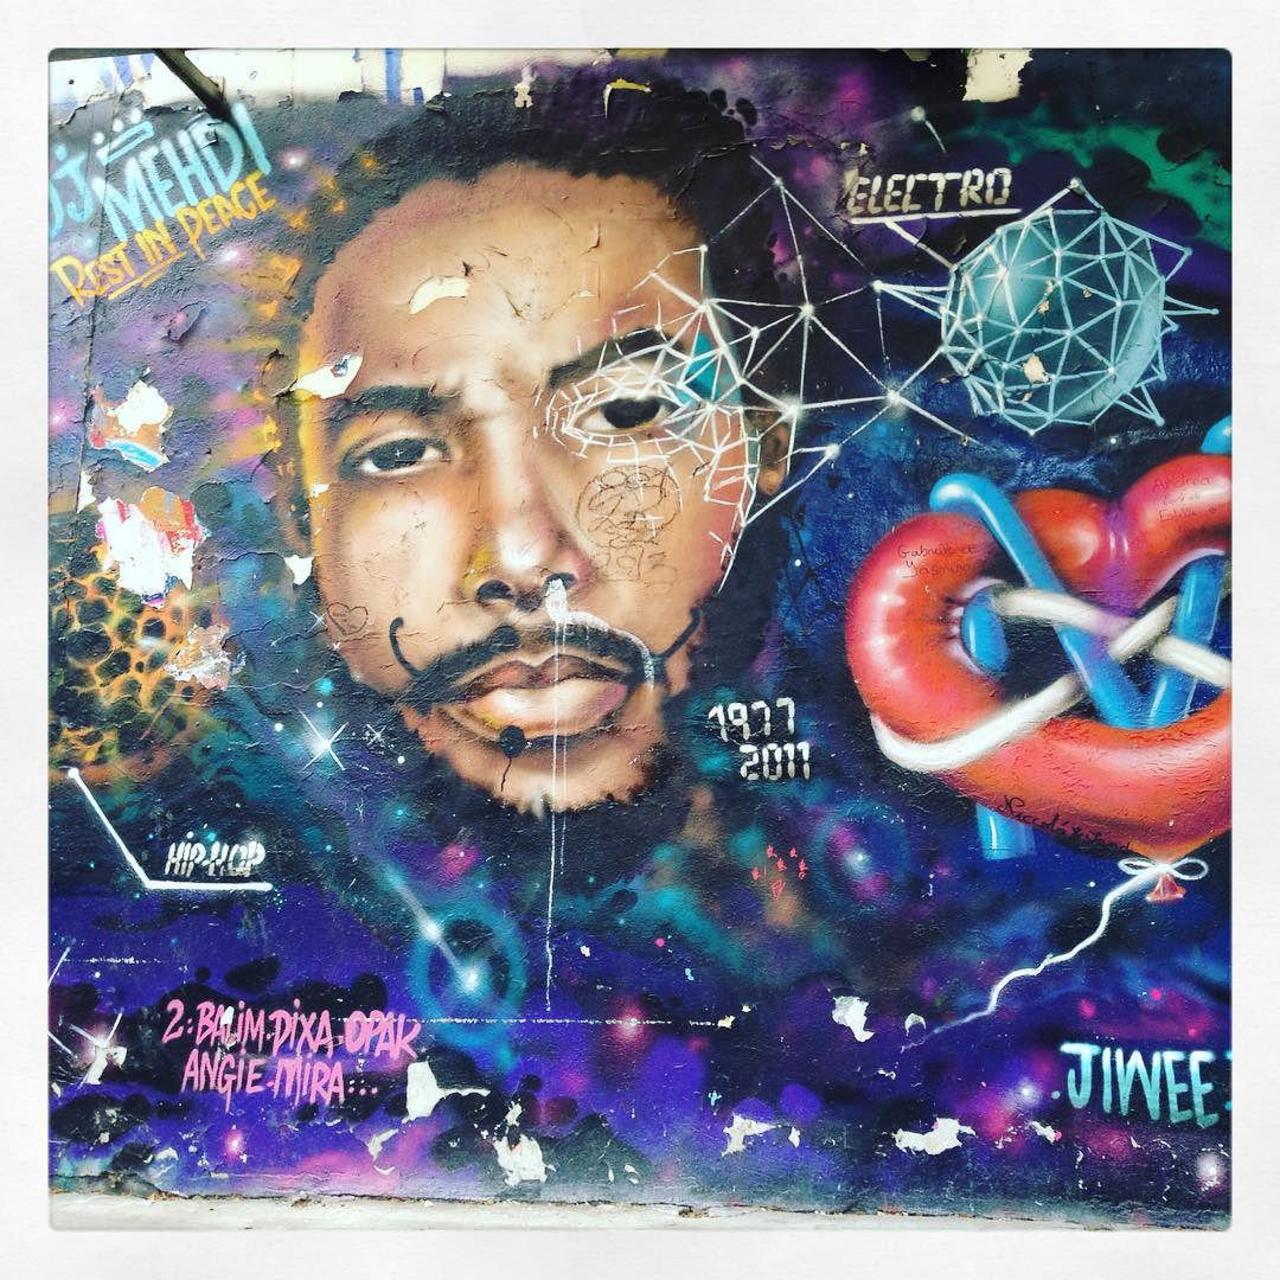 #Paris #graffiti photo by @cibti4987 http://ift.tt/1LGhZEE #StreetArt http://t.co/j2YPoxca5c